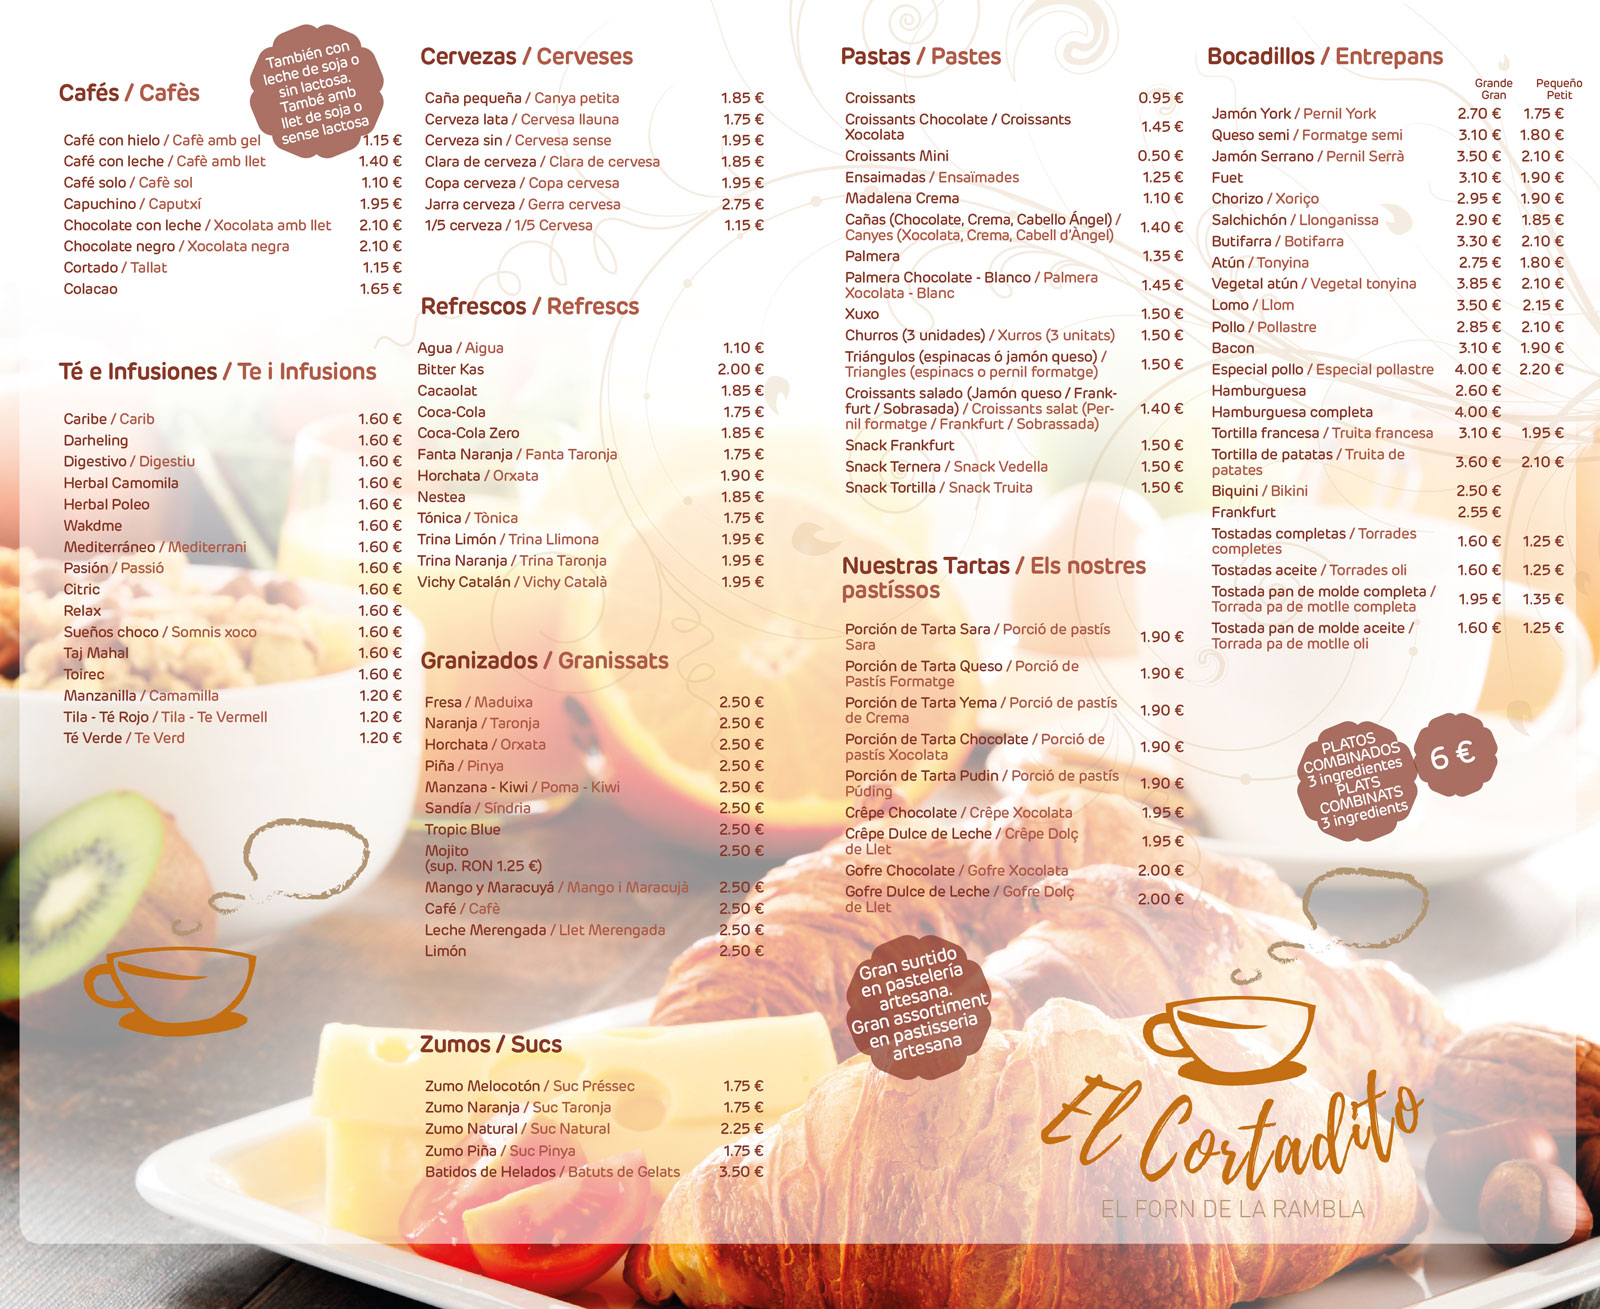 Graphic and creative logo design for coffee-shop and restaurant: El Cortadito